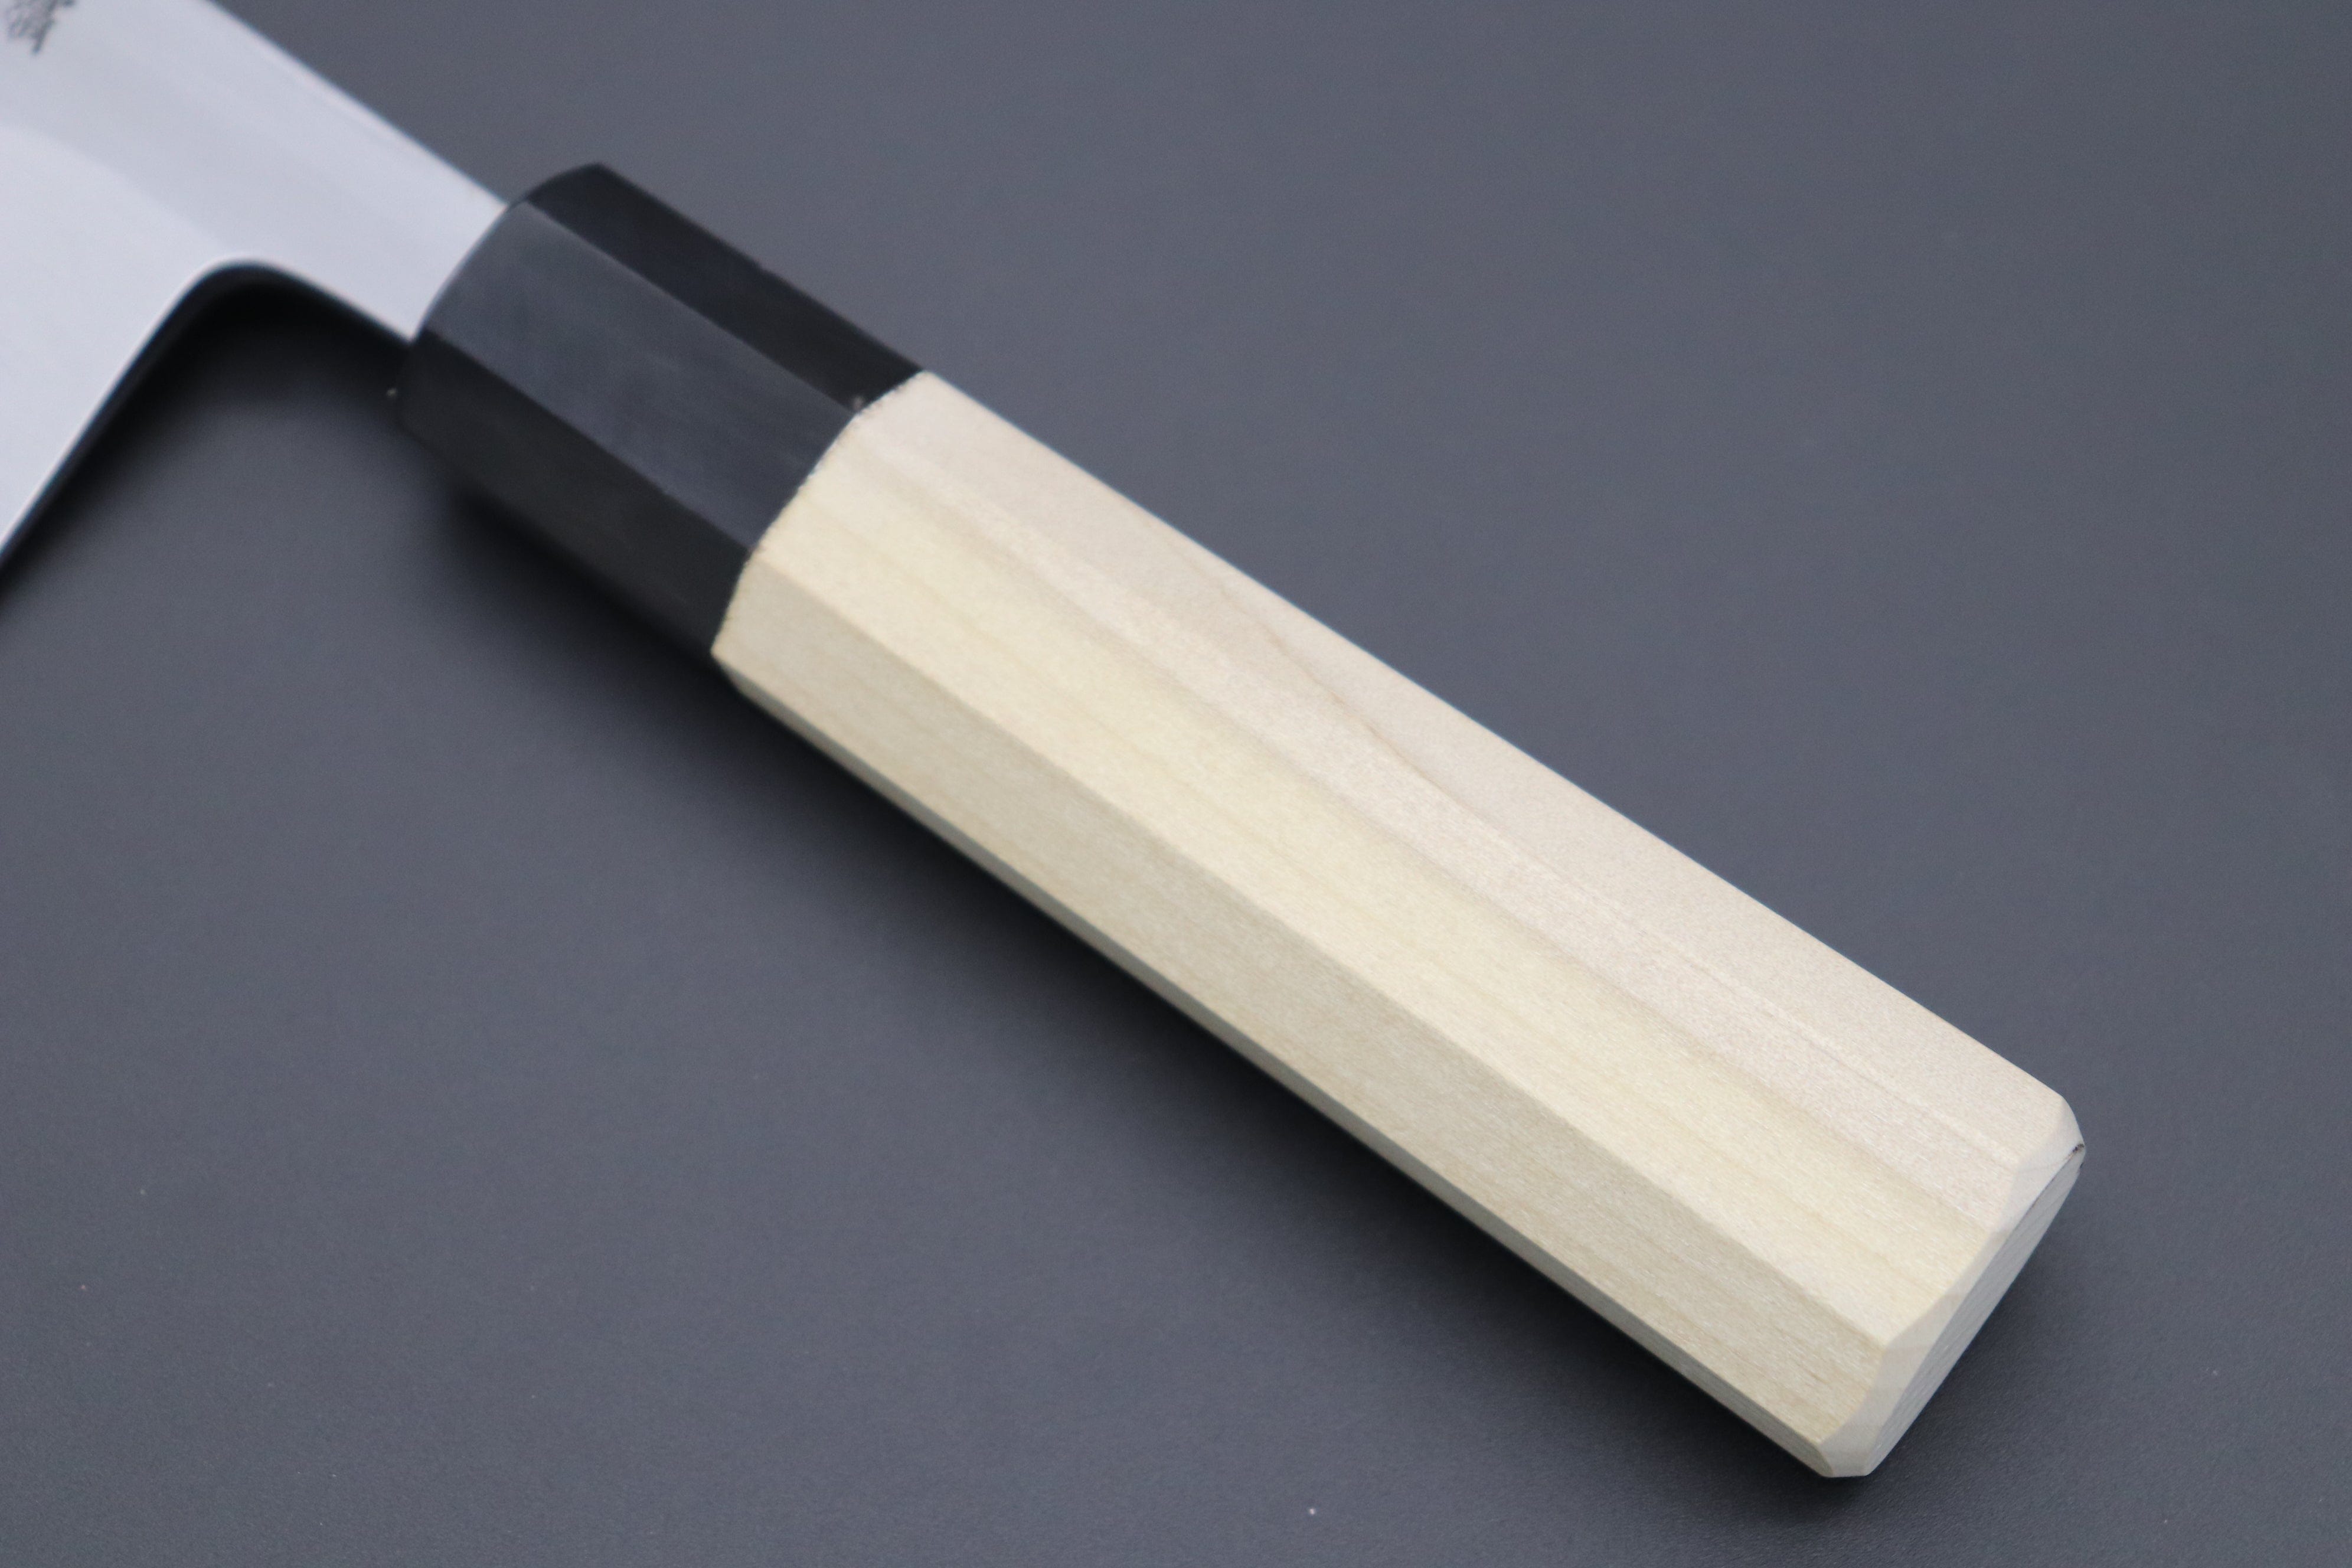 Wooden Saya Cover for Deba Knife 165mm 180mm 210mm (180mm)